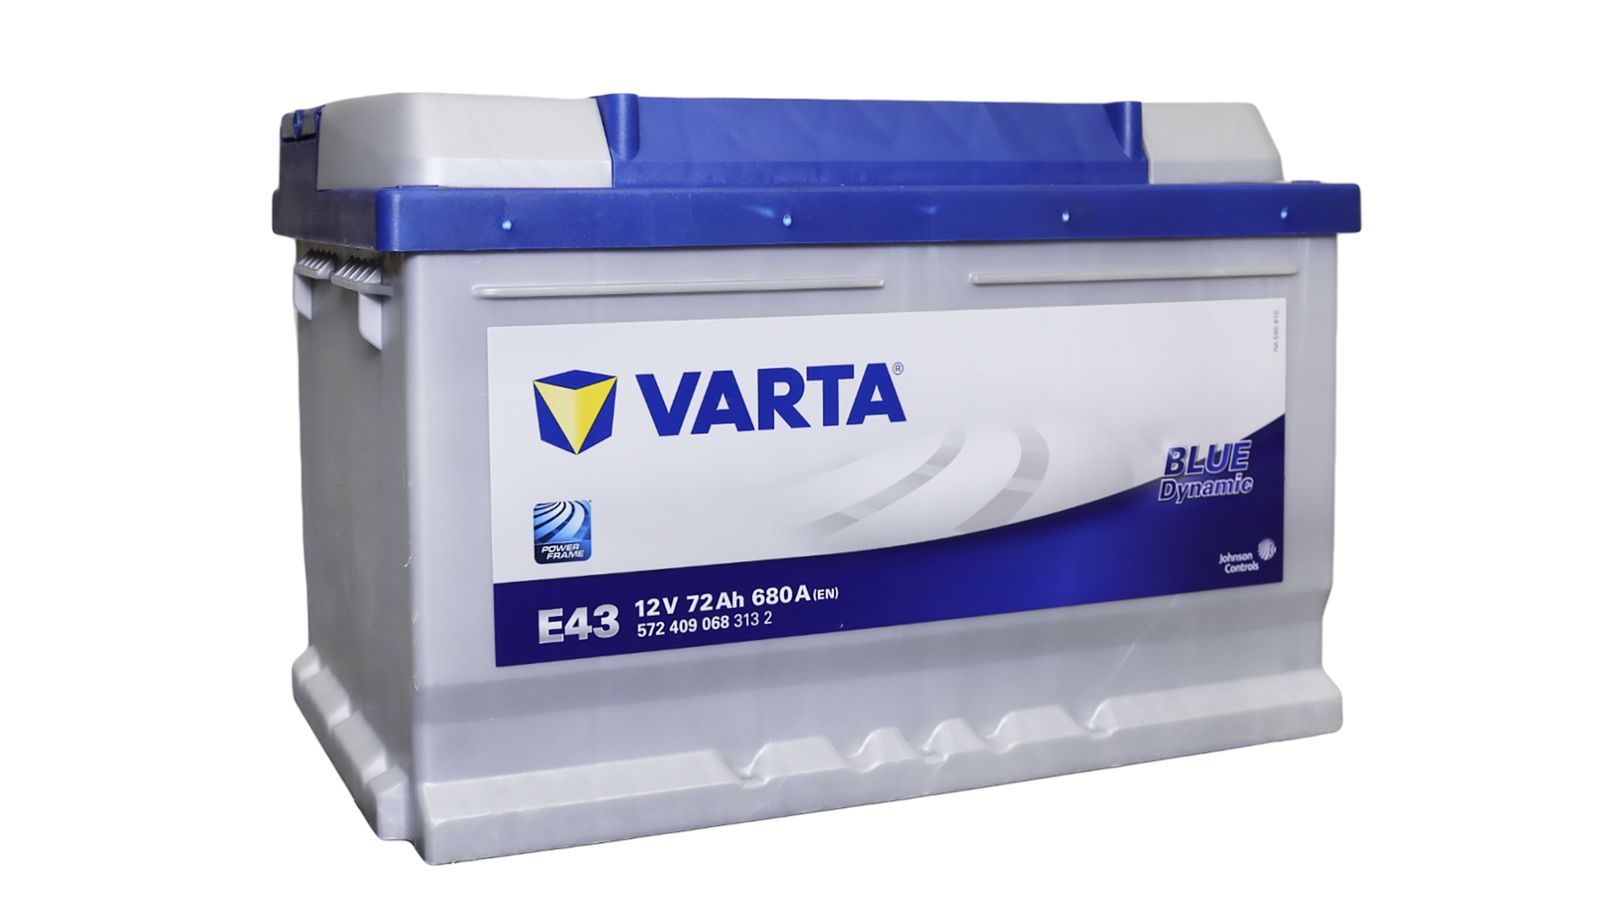 Аккумуляторная батарея VARTA BLUE 6СТ72 E43 * 572 409 068 680 А фотография №2